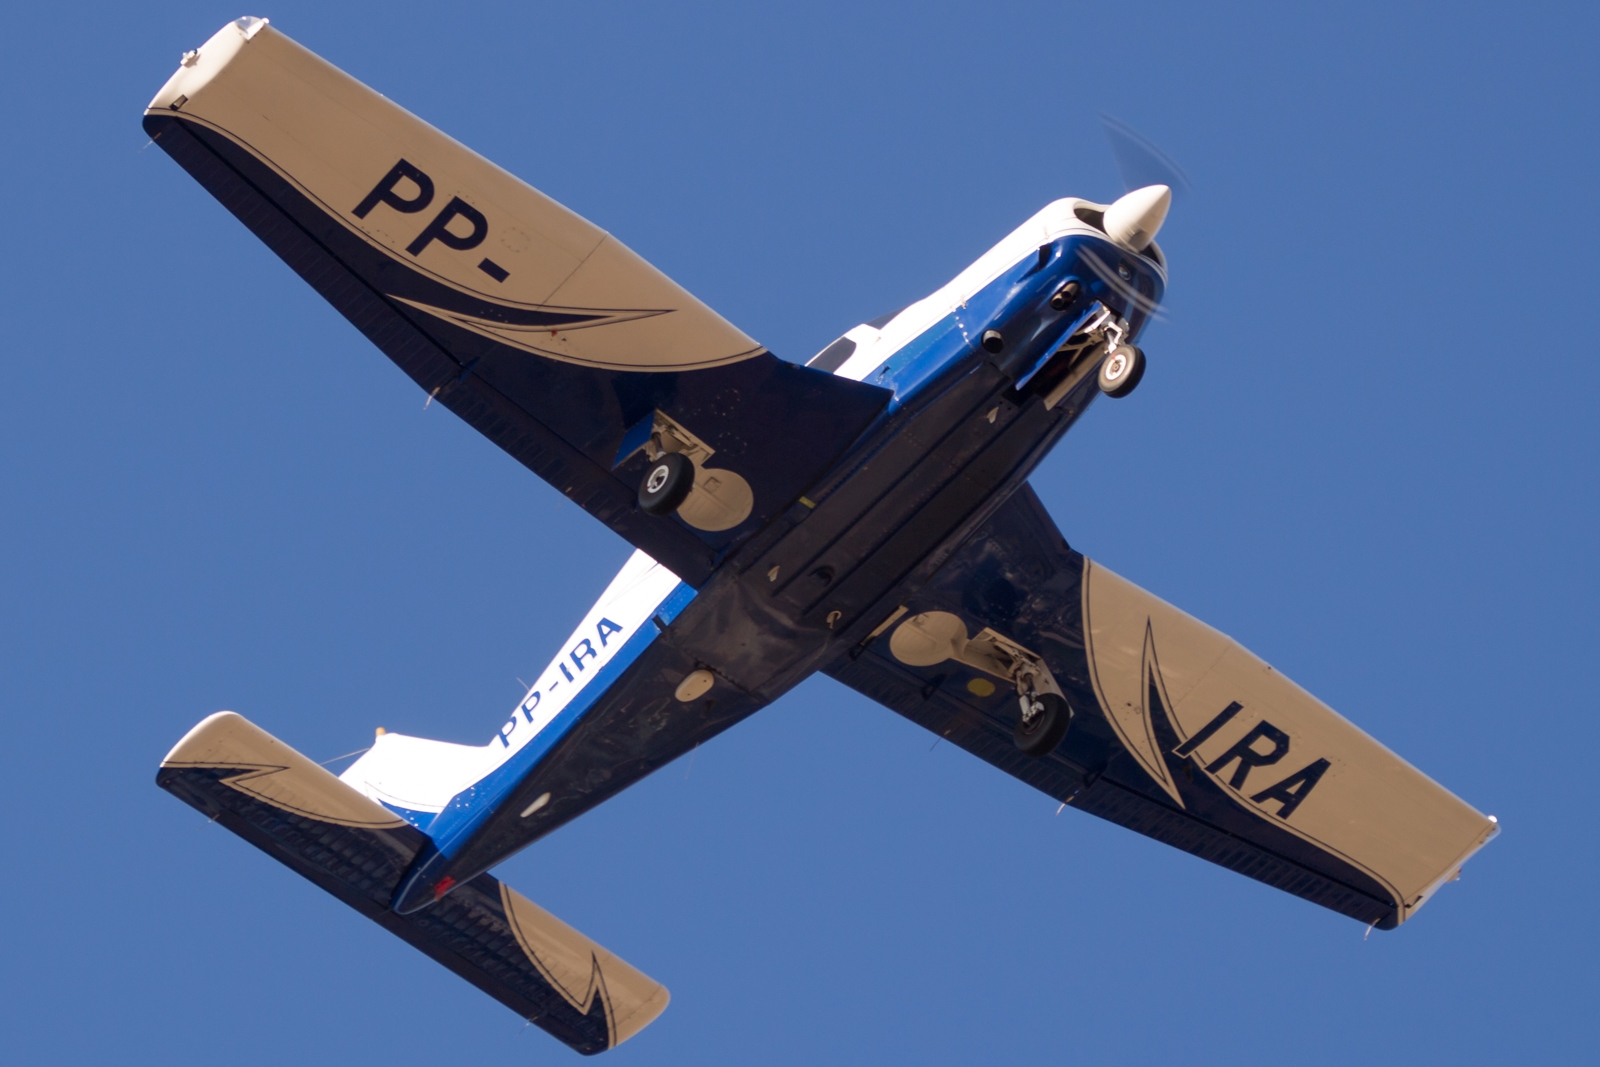 PP-IRA - Piper PA-28R-200 Arrow